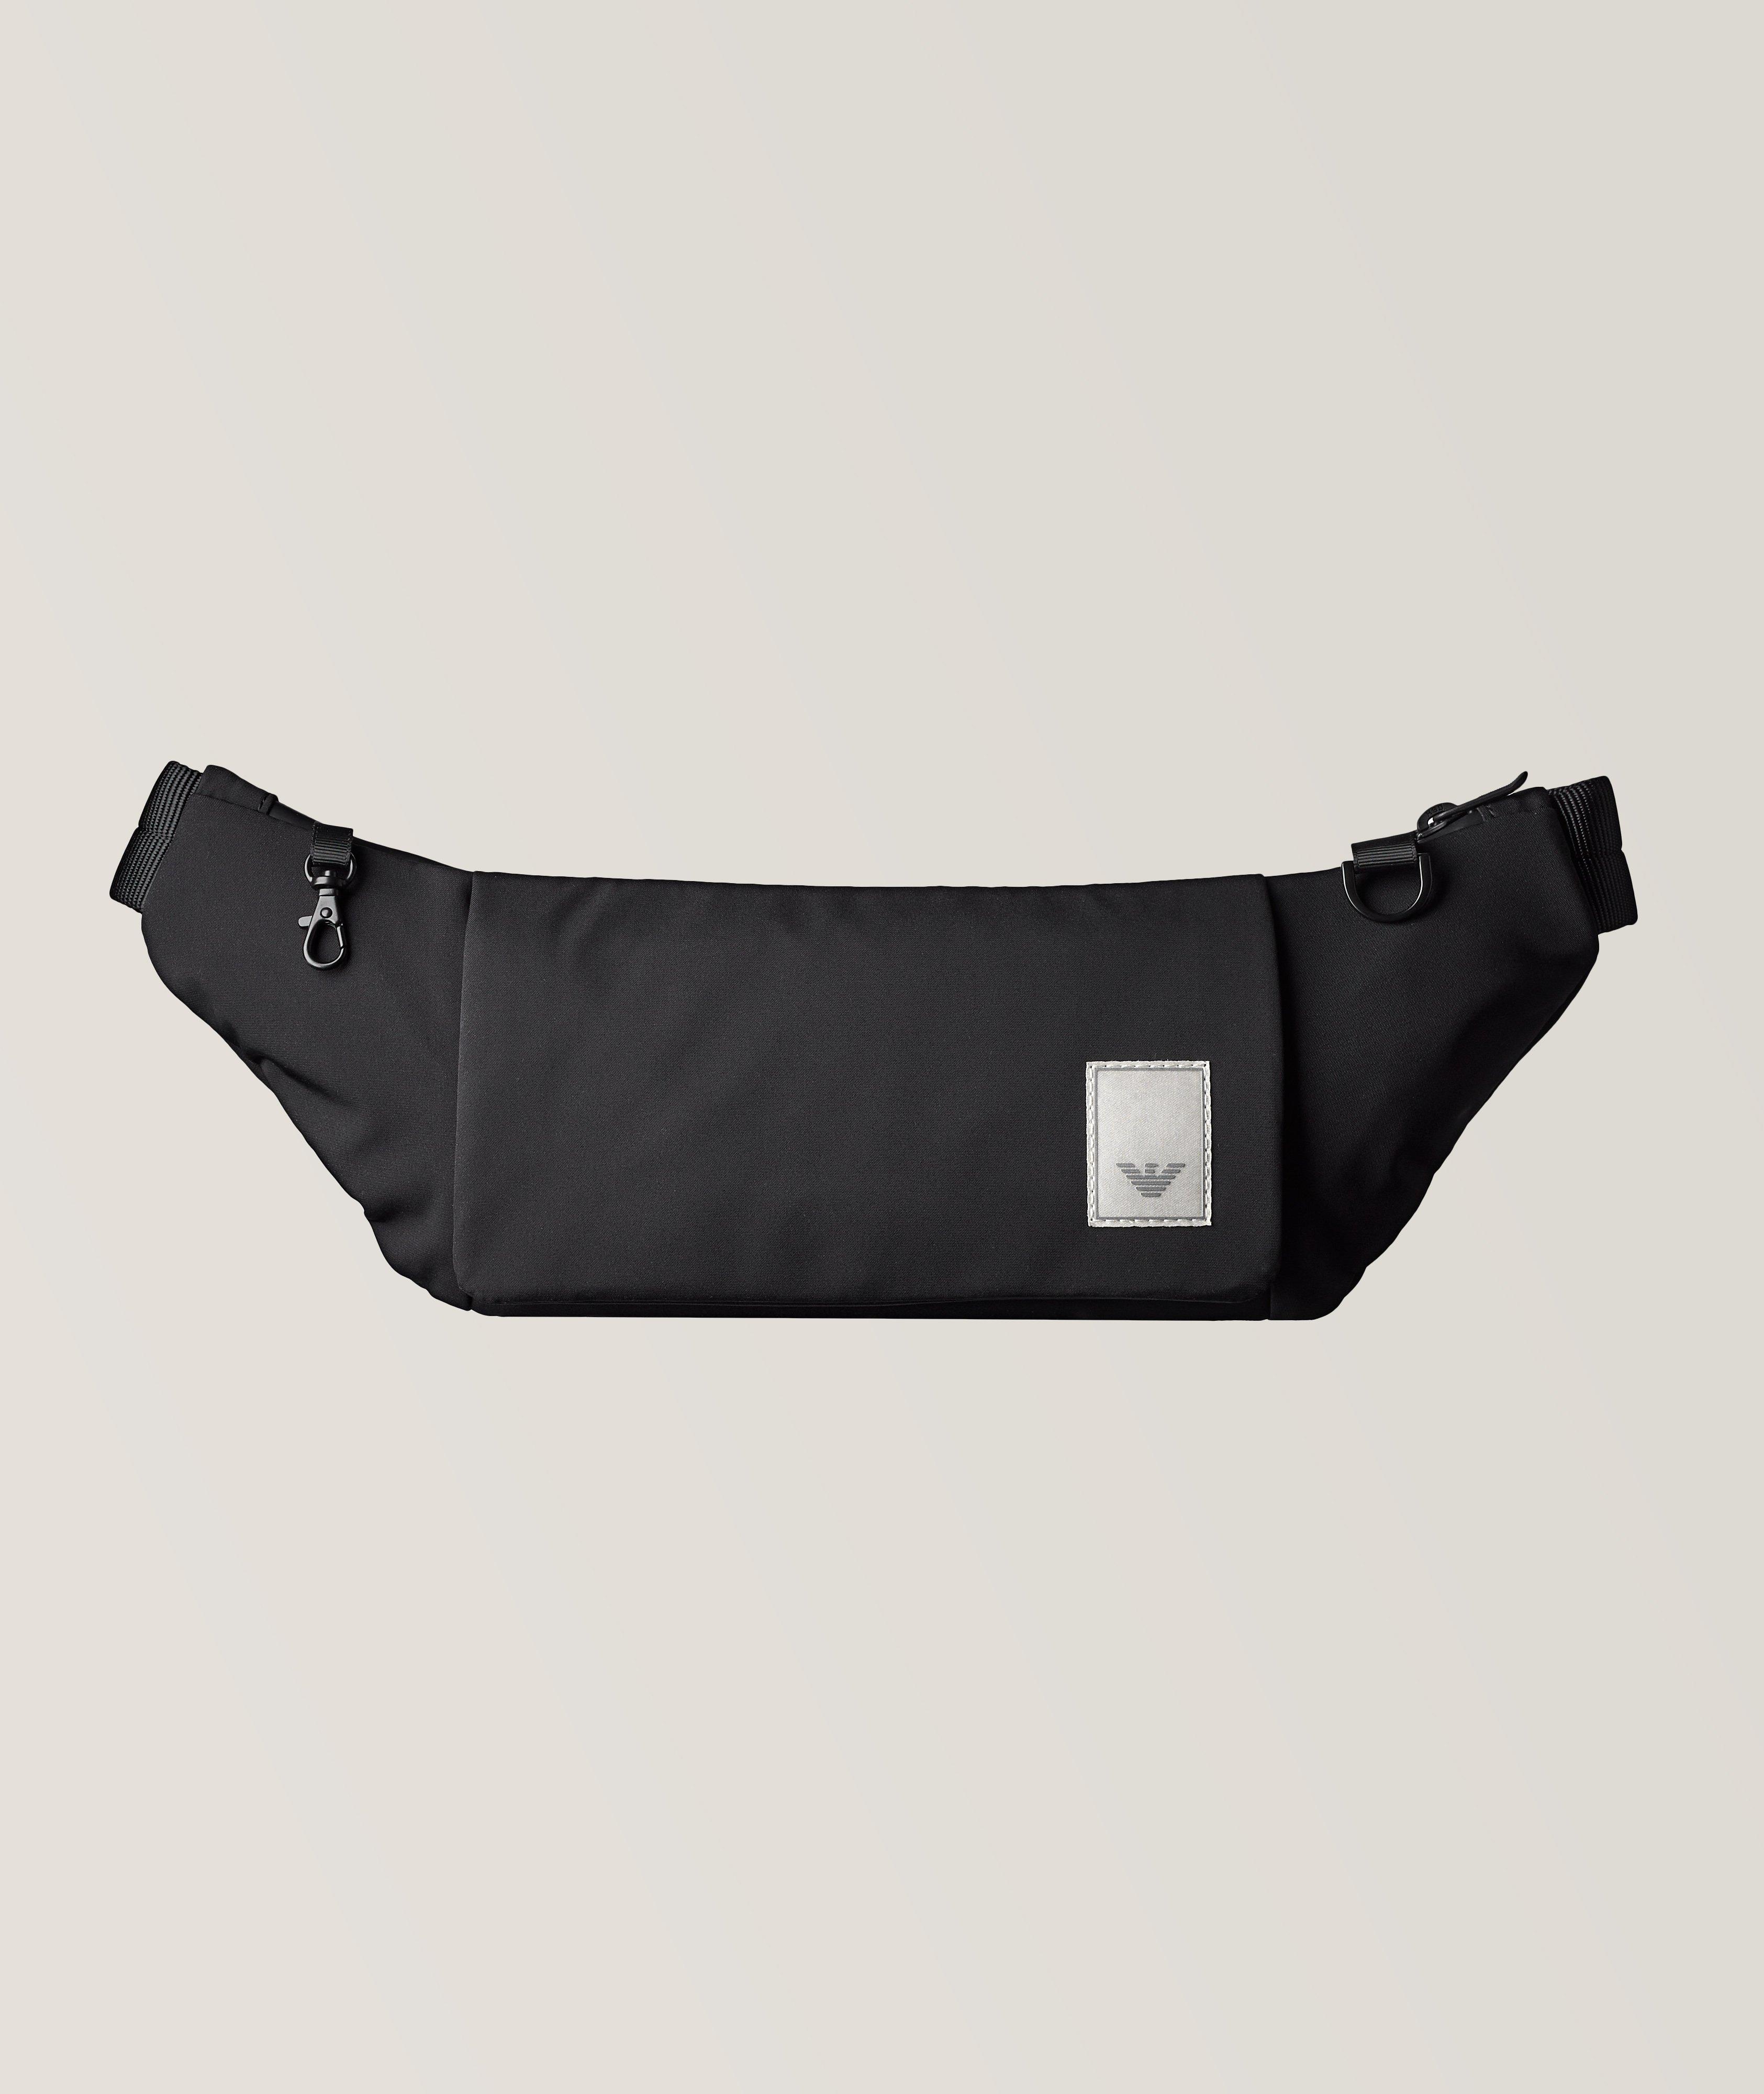 Travel Essentials Nylon Waterproof Belt Bag image 0